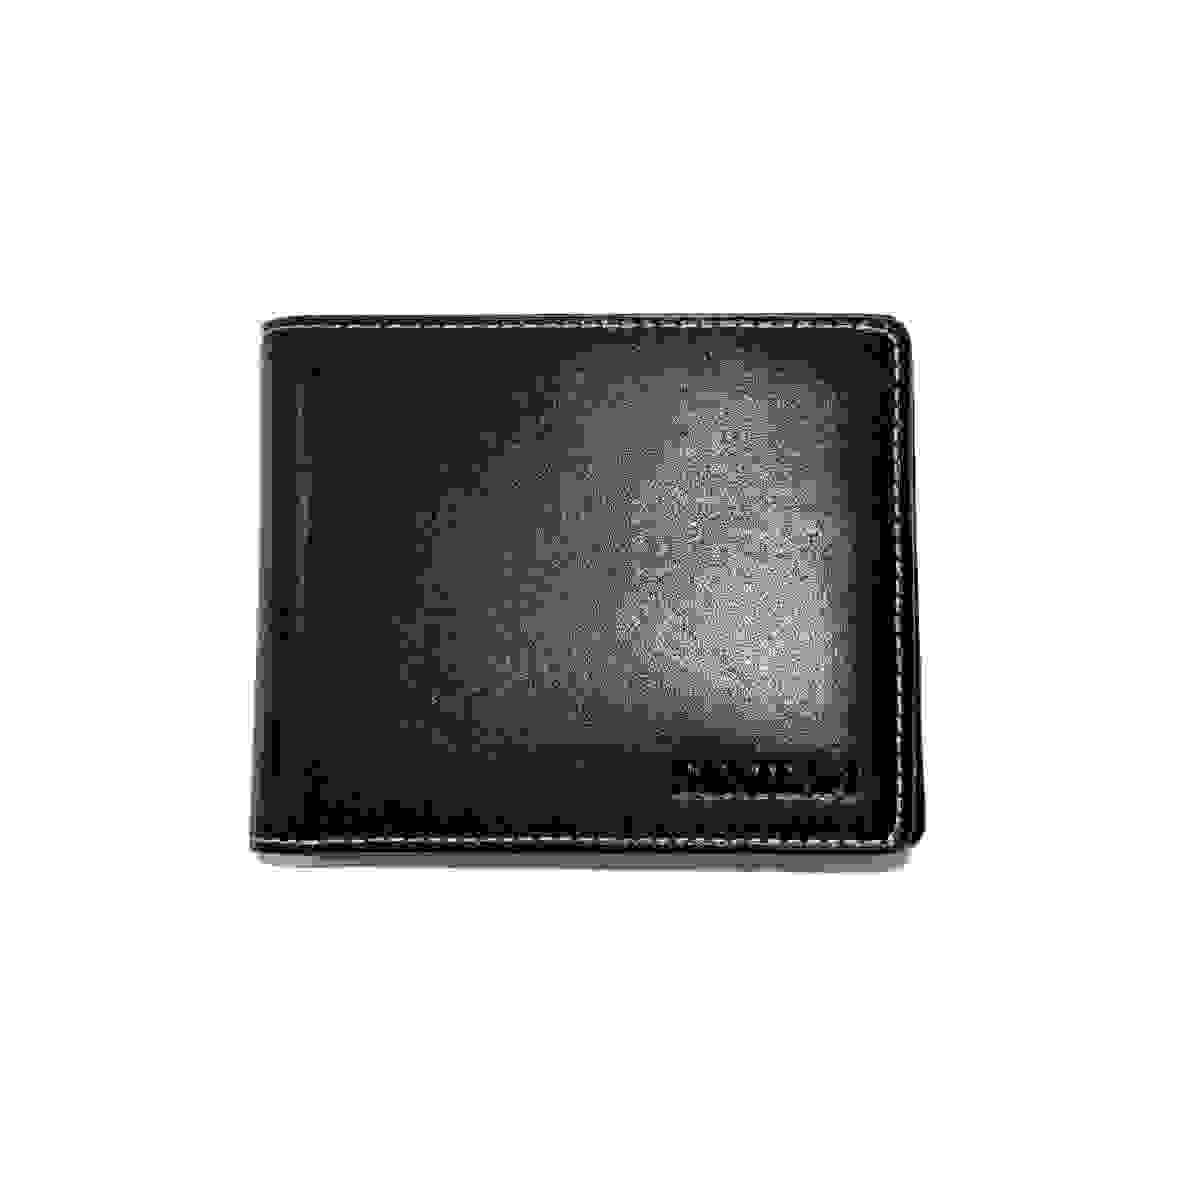 wallet supplier,full grain purse supplier in China,genuine leather wallet  manufacturer